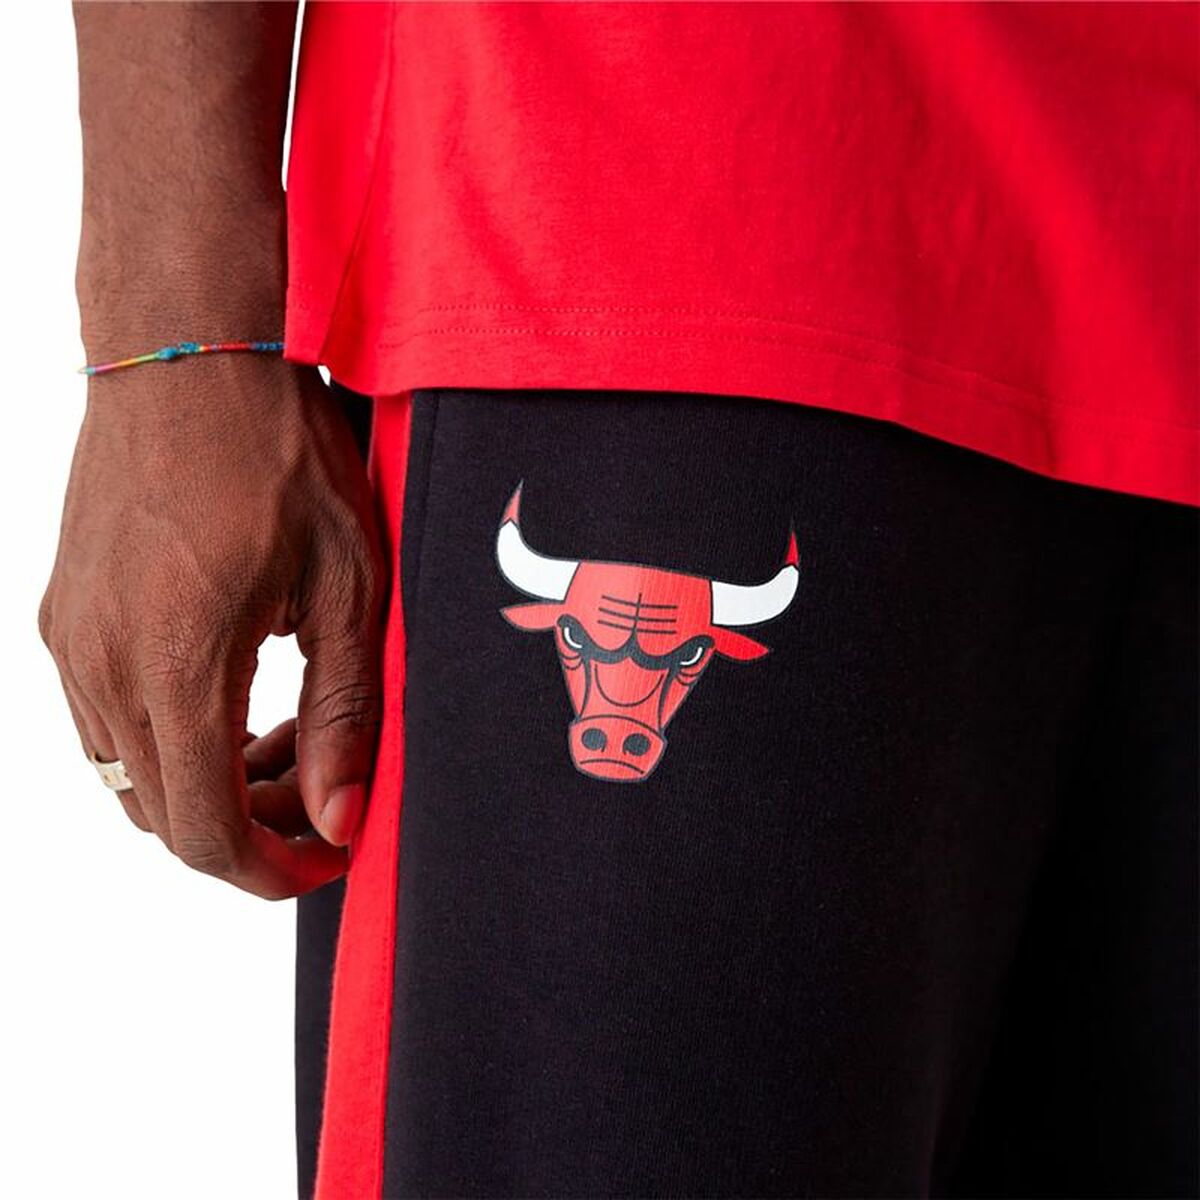 Kaufe Hose für Erwachsene New Era NBA Colour Block Chicago Bulls Schwarz Herren bei AWK Flagship um € 65.00